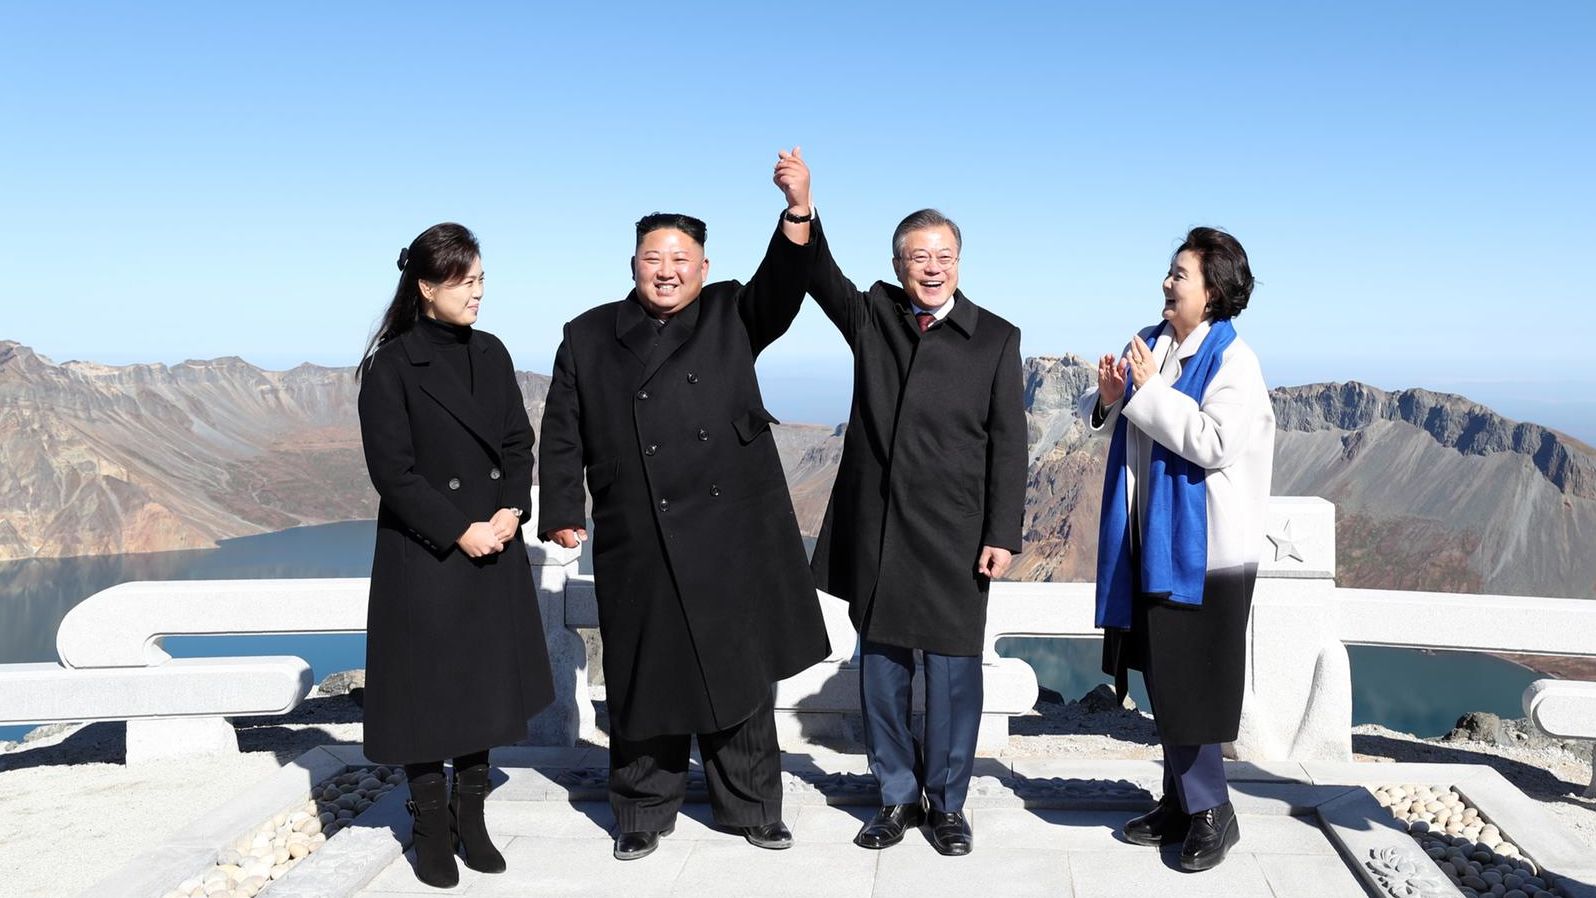 A handout photo shows South Korean President Moon Jae-in and North Korean leader Kim Jong Un visiting Mount Paektu.